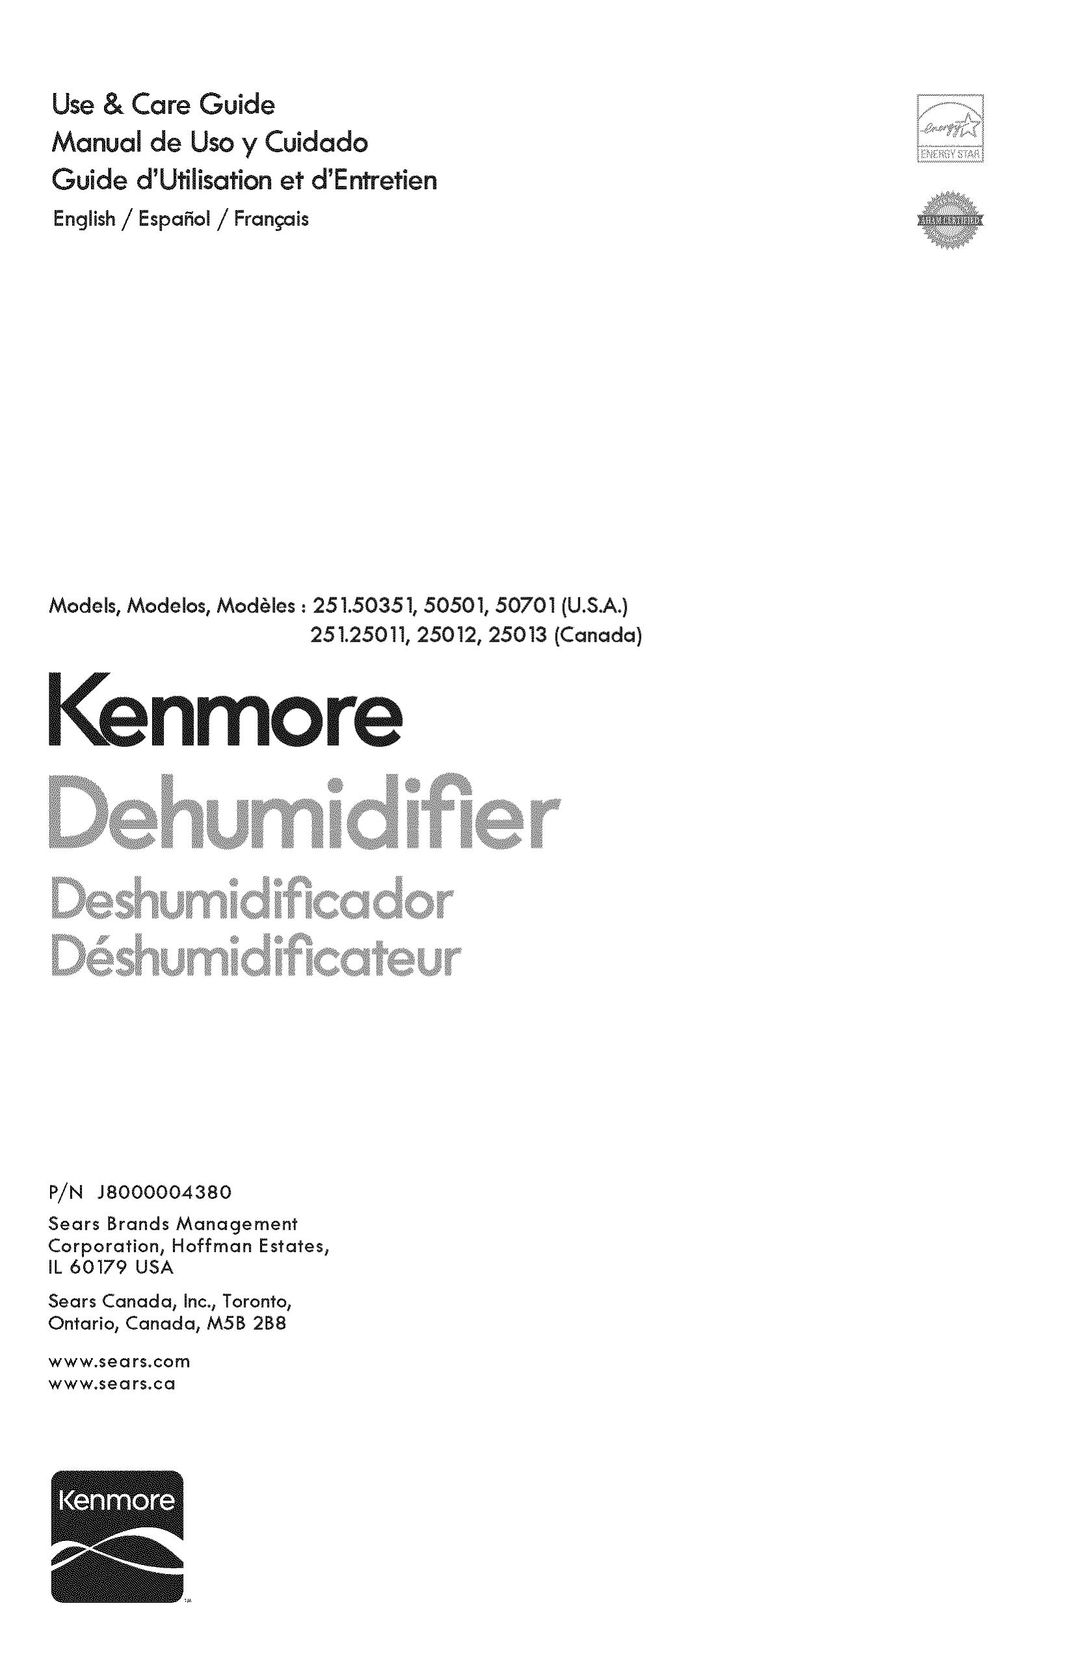 Kenmore 251.50351 Dehumidifier User Manual